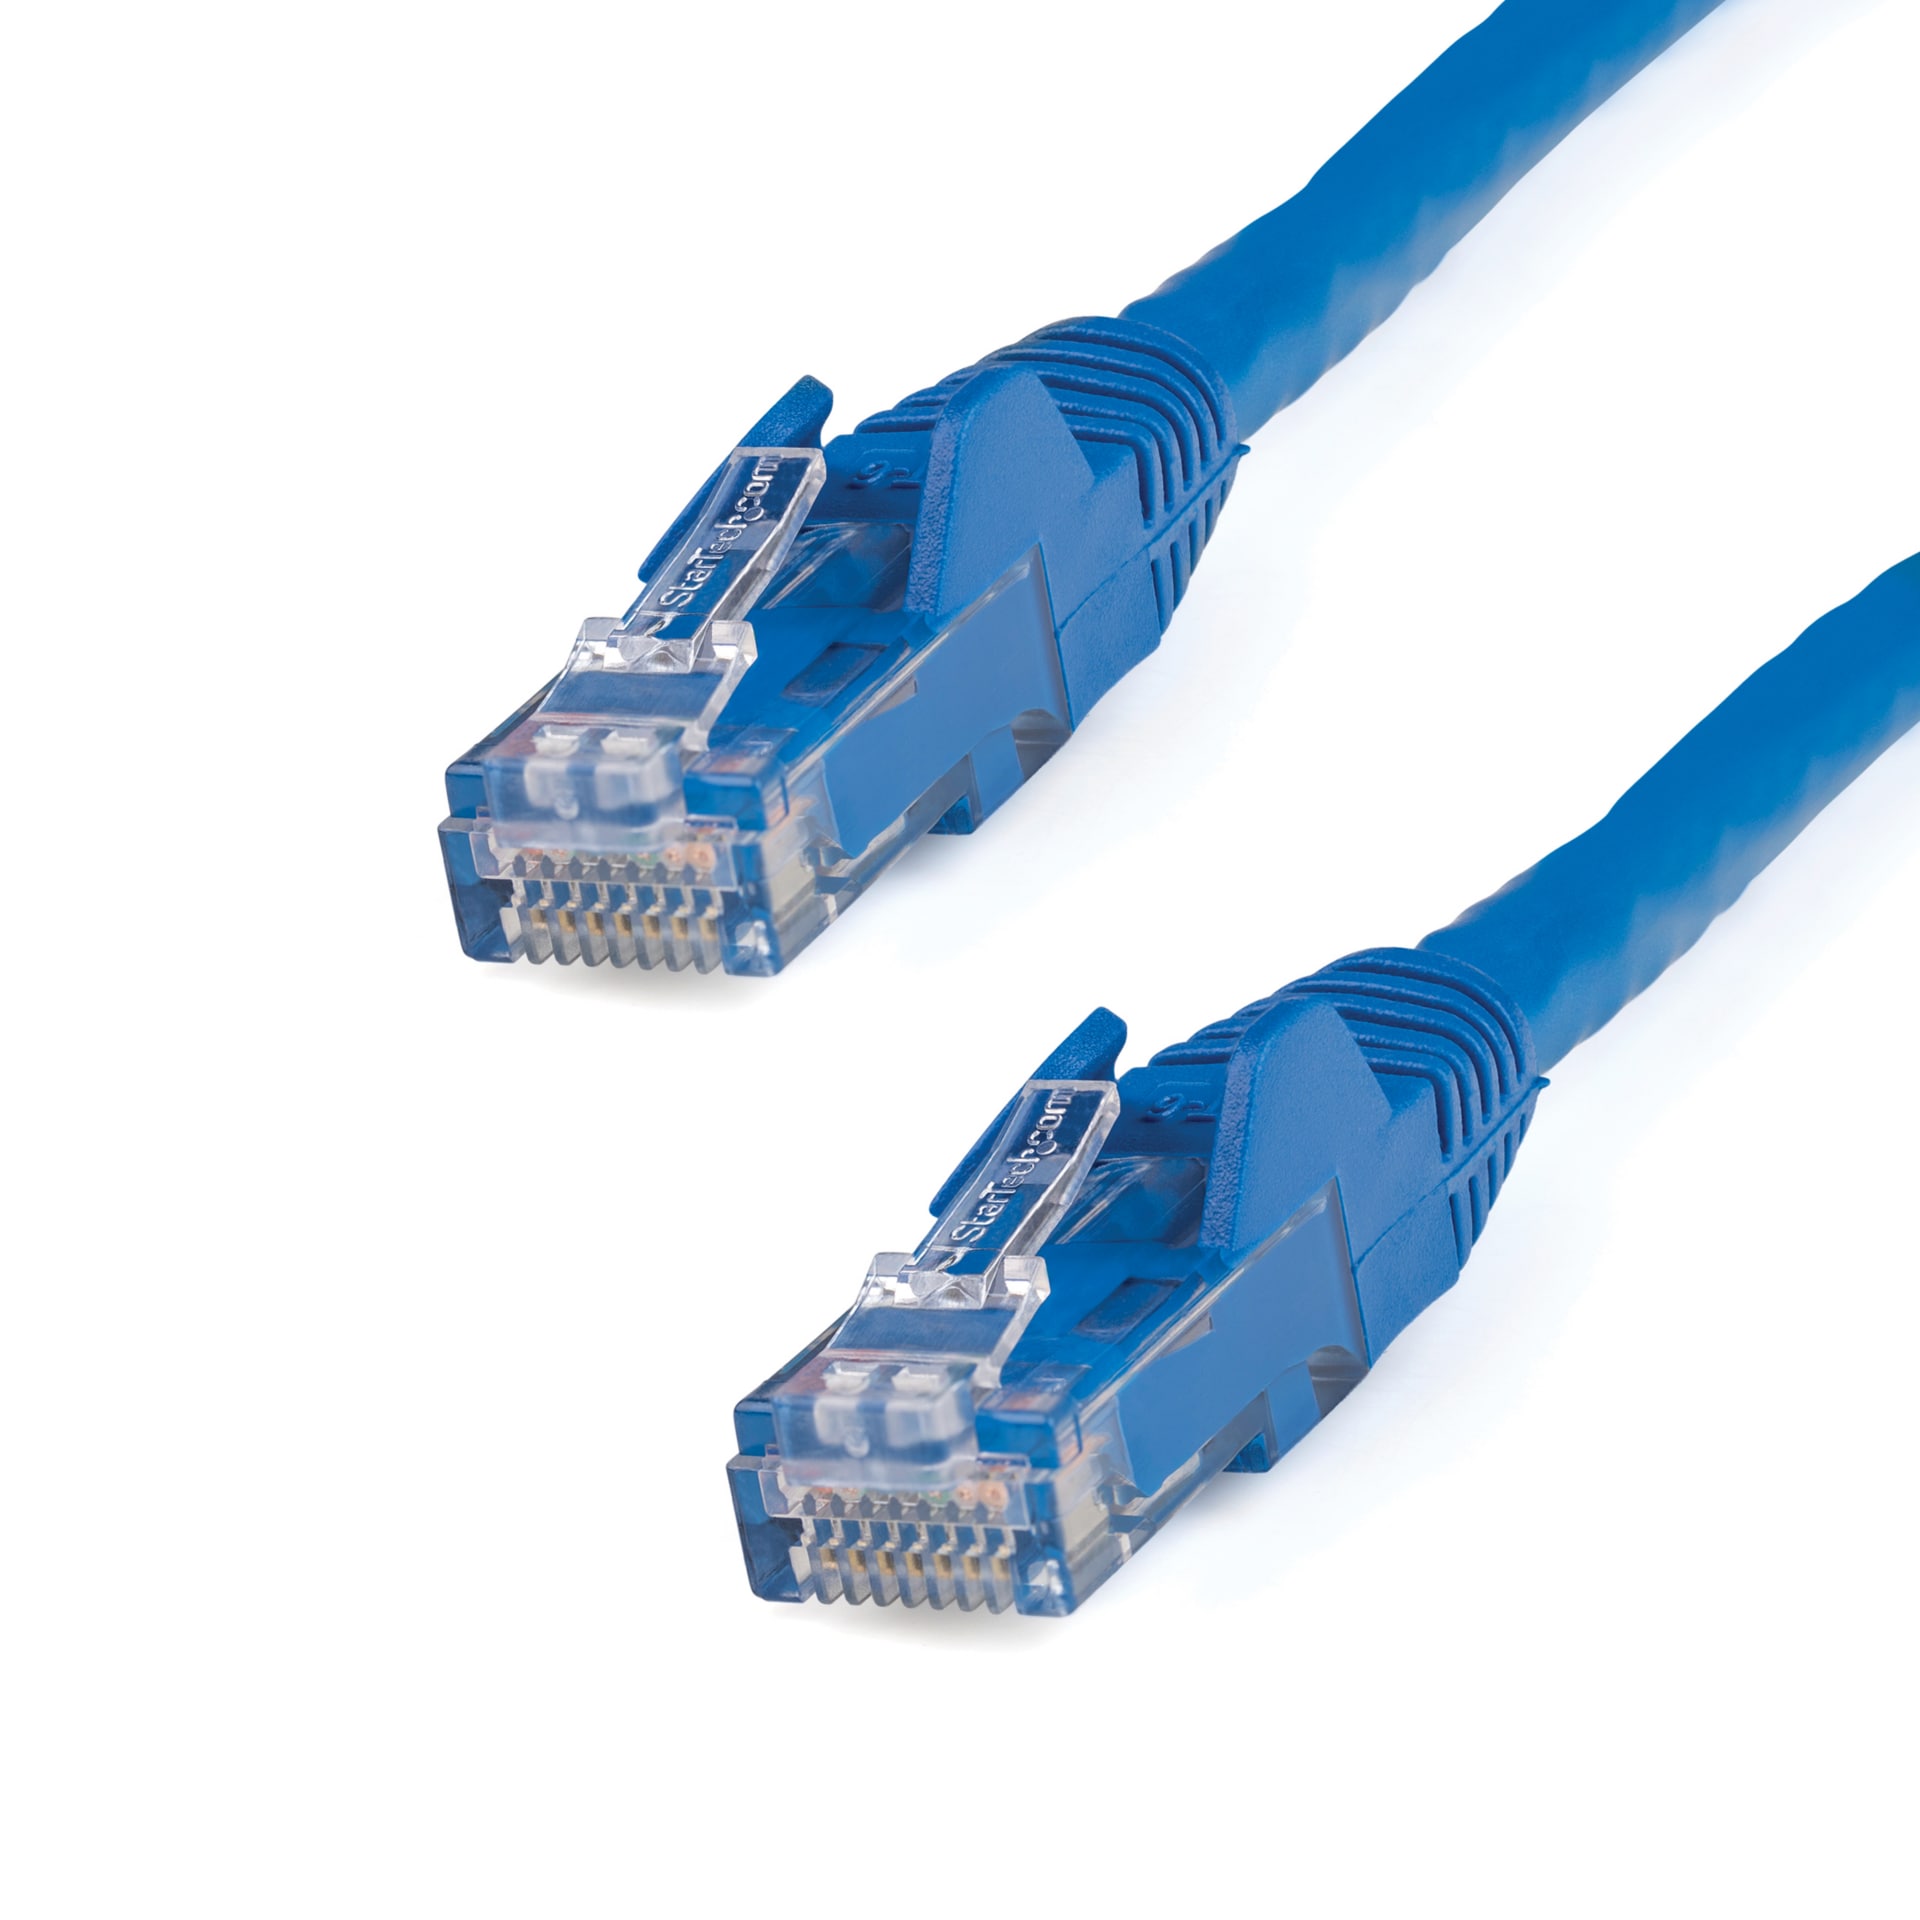 StarTech.com 4ft CAT6 Ethernet Cable Blue Snagless UTP CAT 6 Gigabit Cord/Wire 100W PoE 650MHz